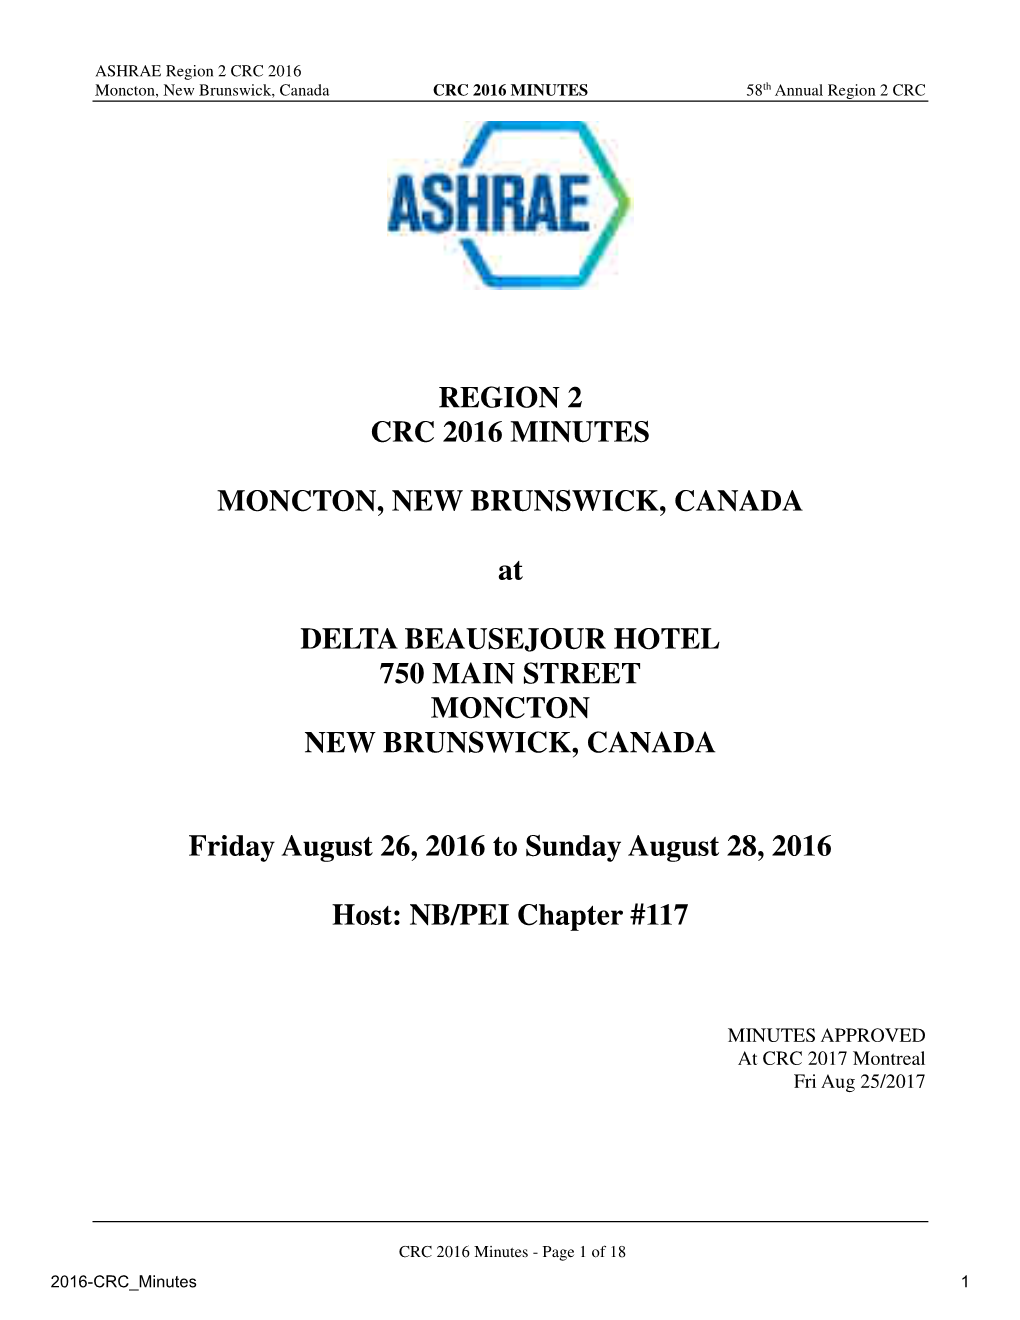 ASHRAE Staff Report 2016 Region II CRC Moncton, NB